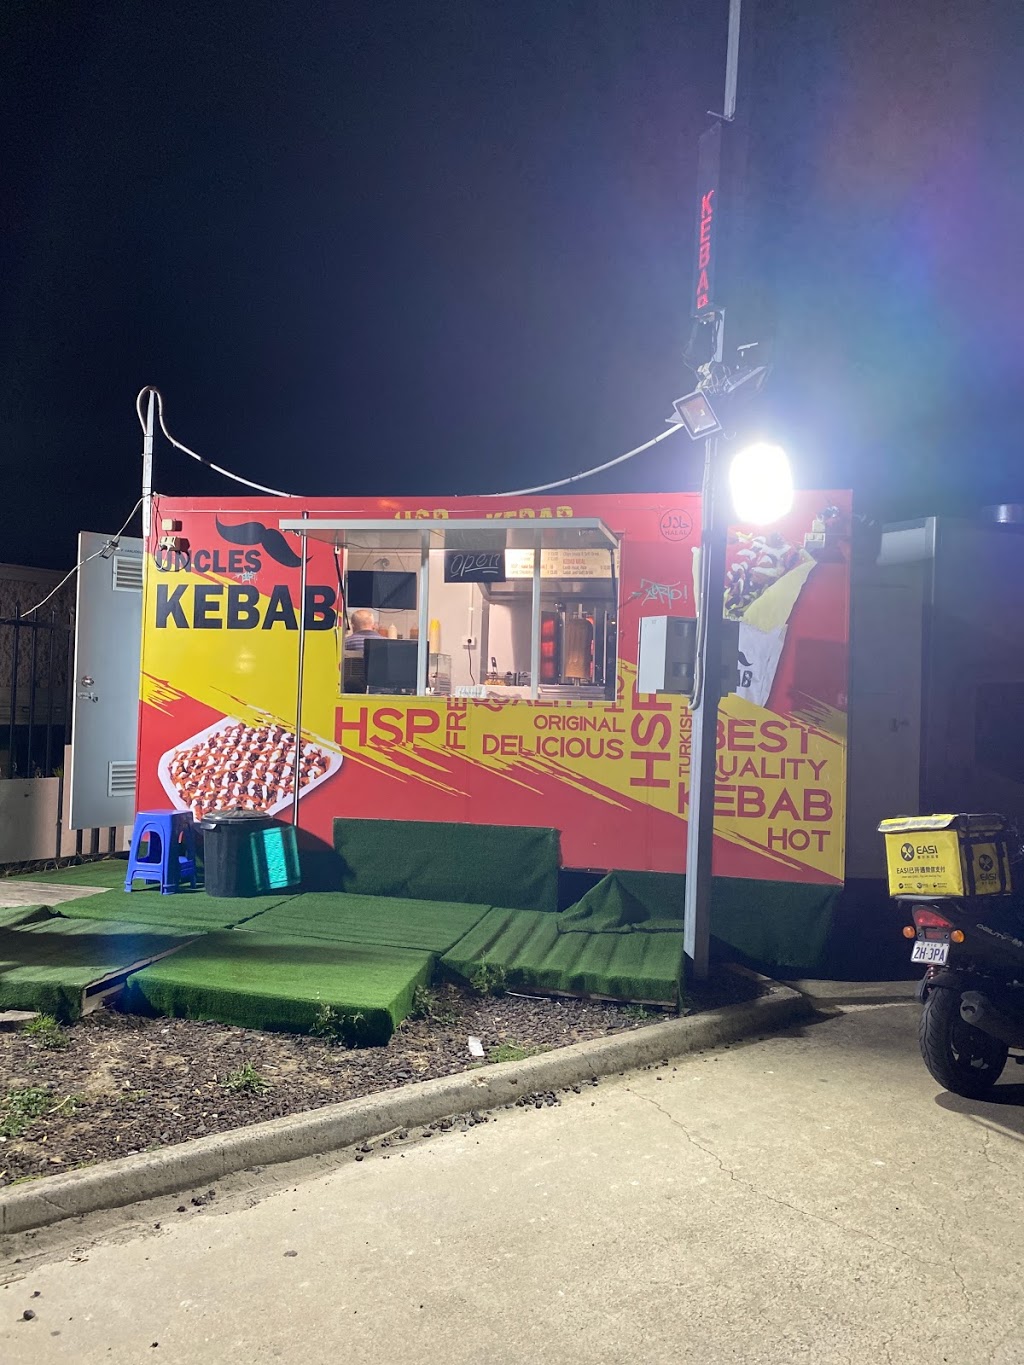 Uncles kebab | restaurant | 997 Ballarat Rd, Ravenhall VIC 3023, Australia